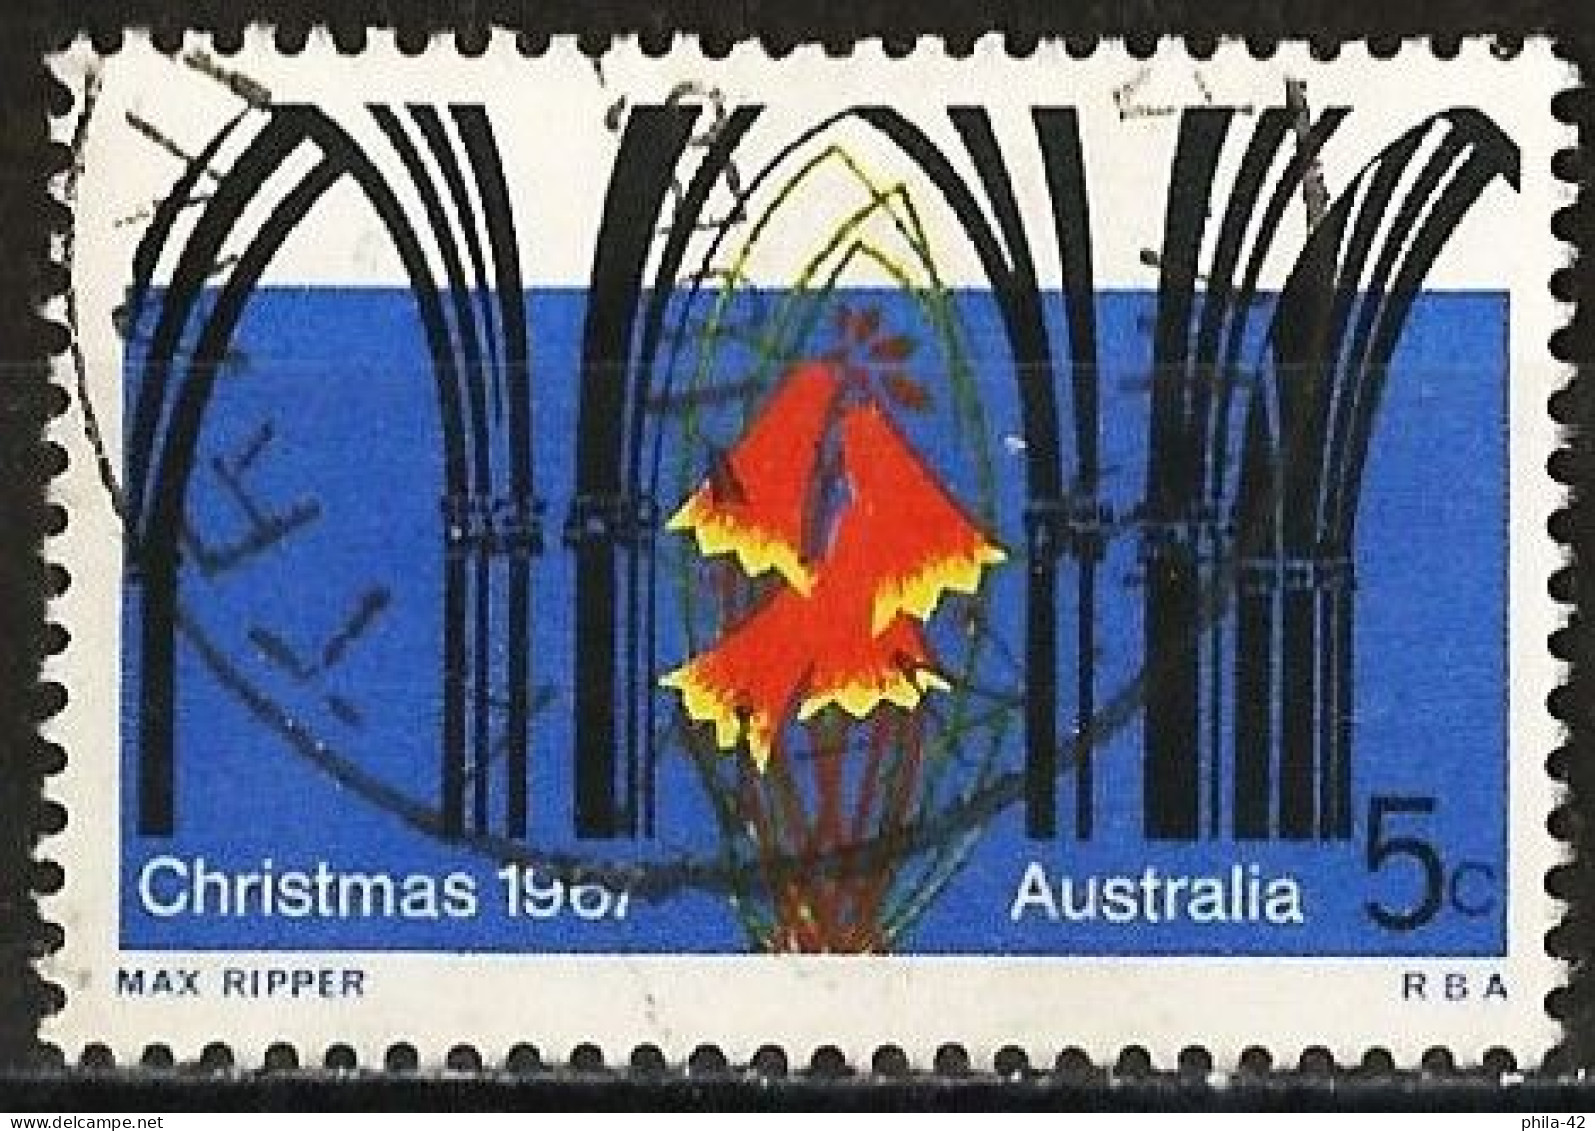 Australia 1967 -  Mi 393 - YT 362 ( Christmas : Flowers Blandfordia Grandiflora ) - Gebruikt